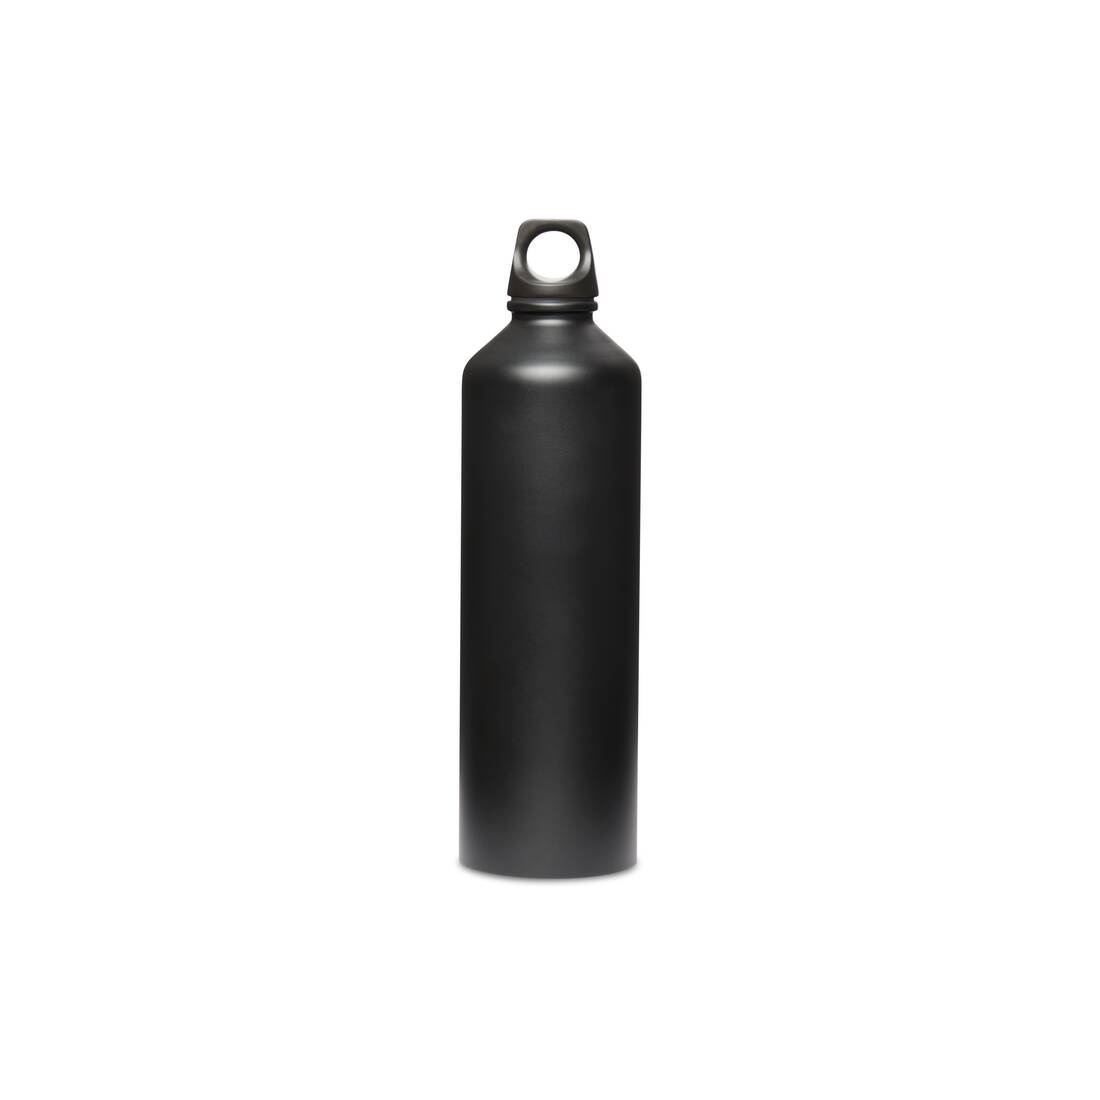 Balenciaga / Adidas Water Bottle in Black - 2